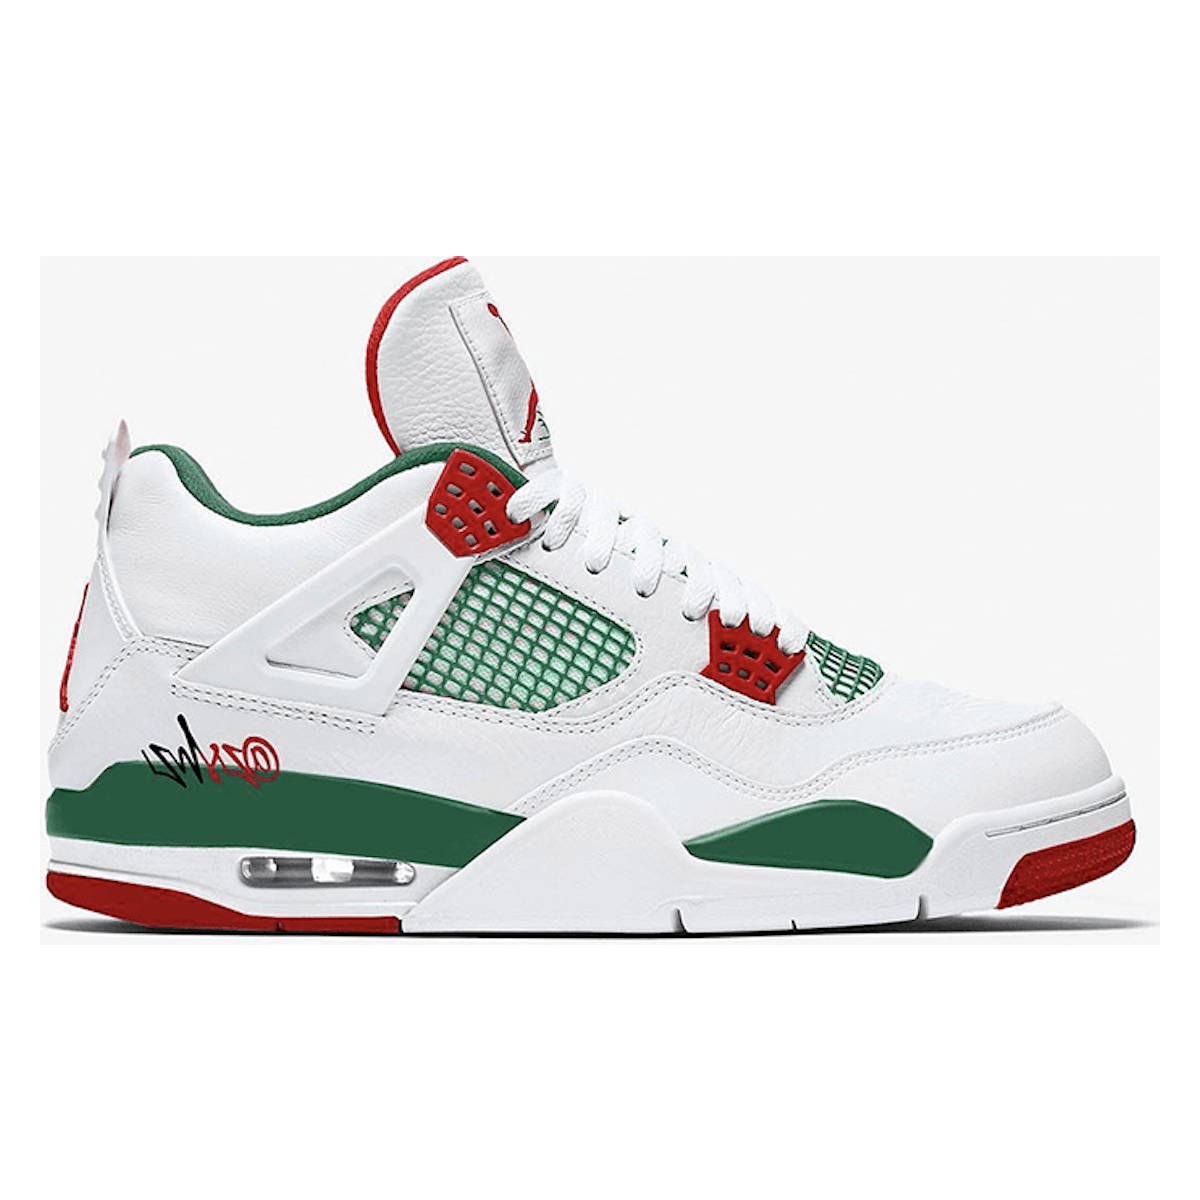 Air Jordan 4 Retro NRG "Do The Right Thing" White/Green